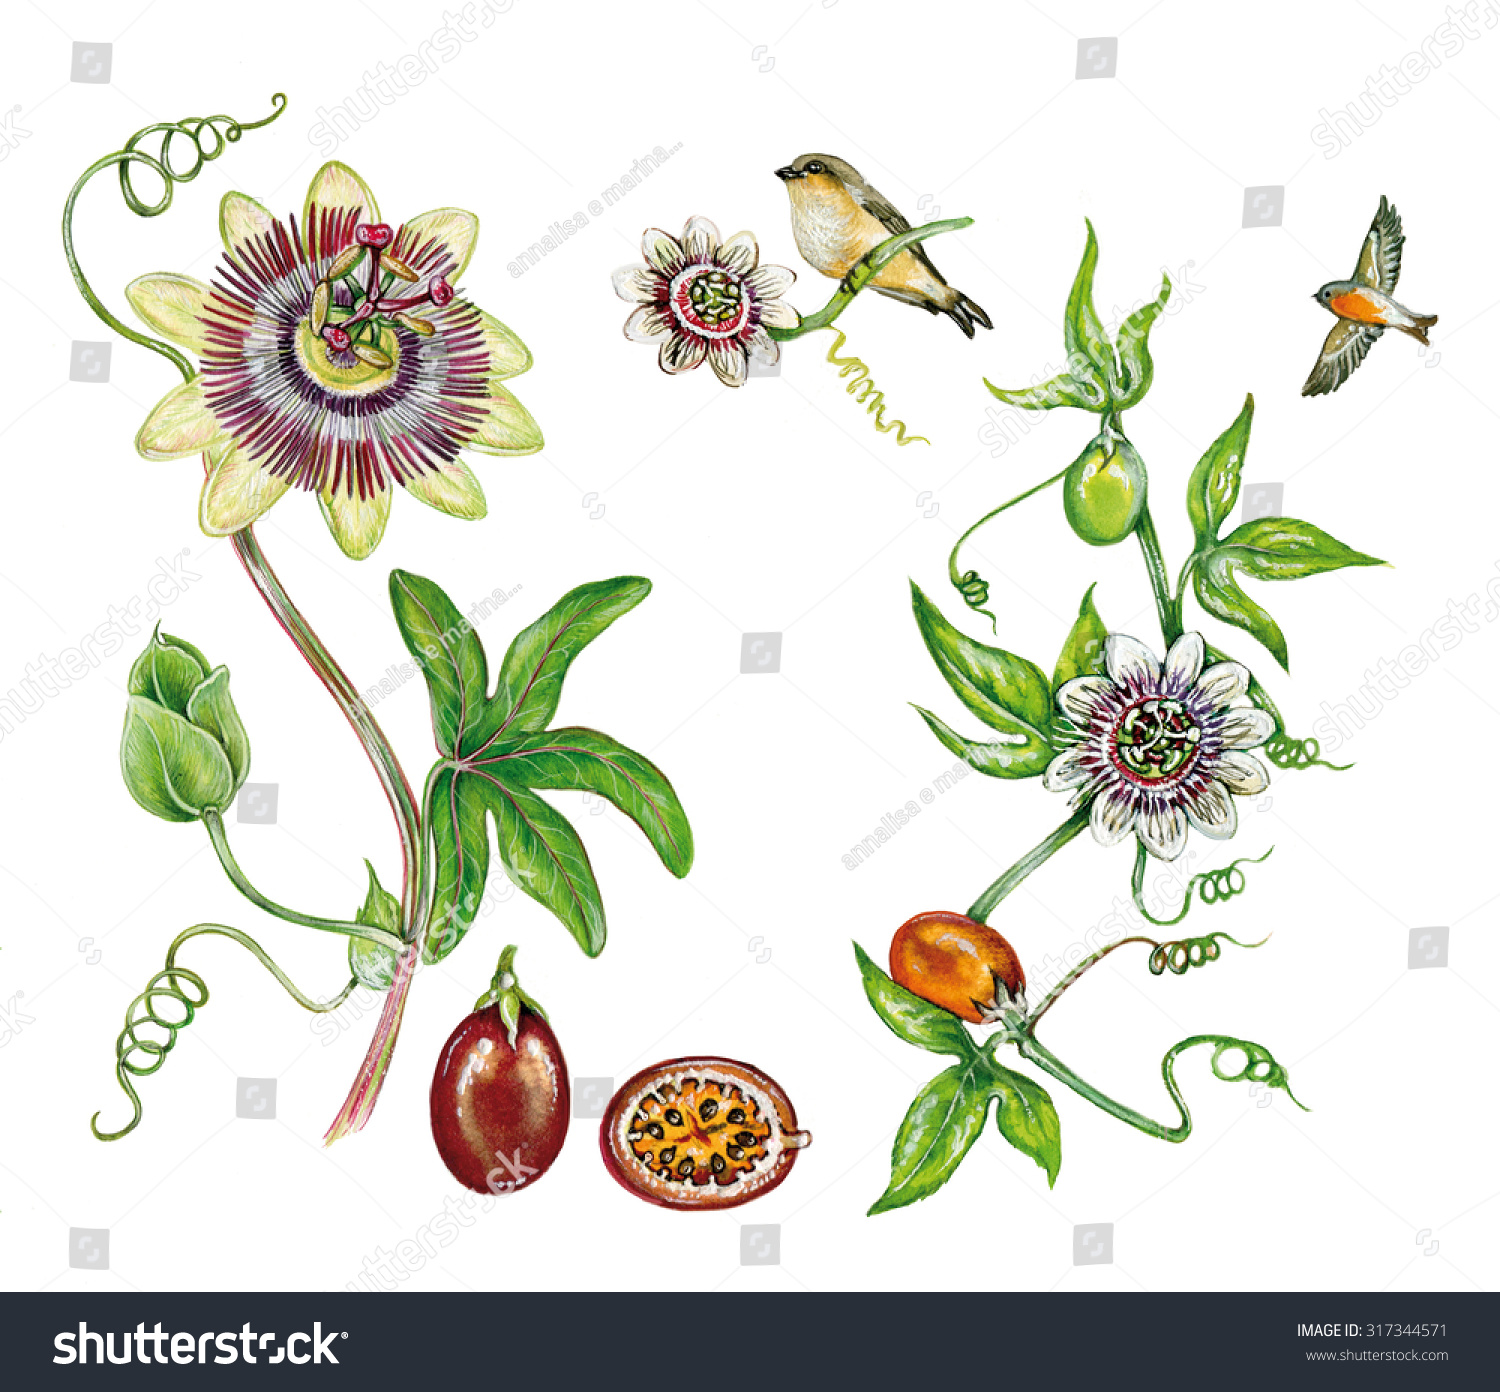 1,430 Scientific flower drawings Images, Stock Photos & Vectors